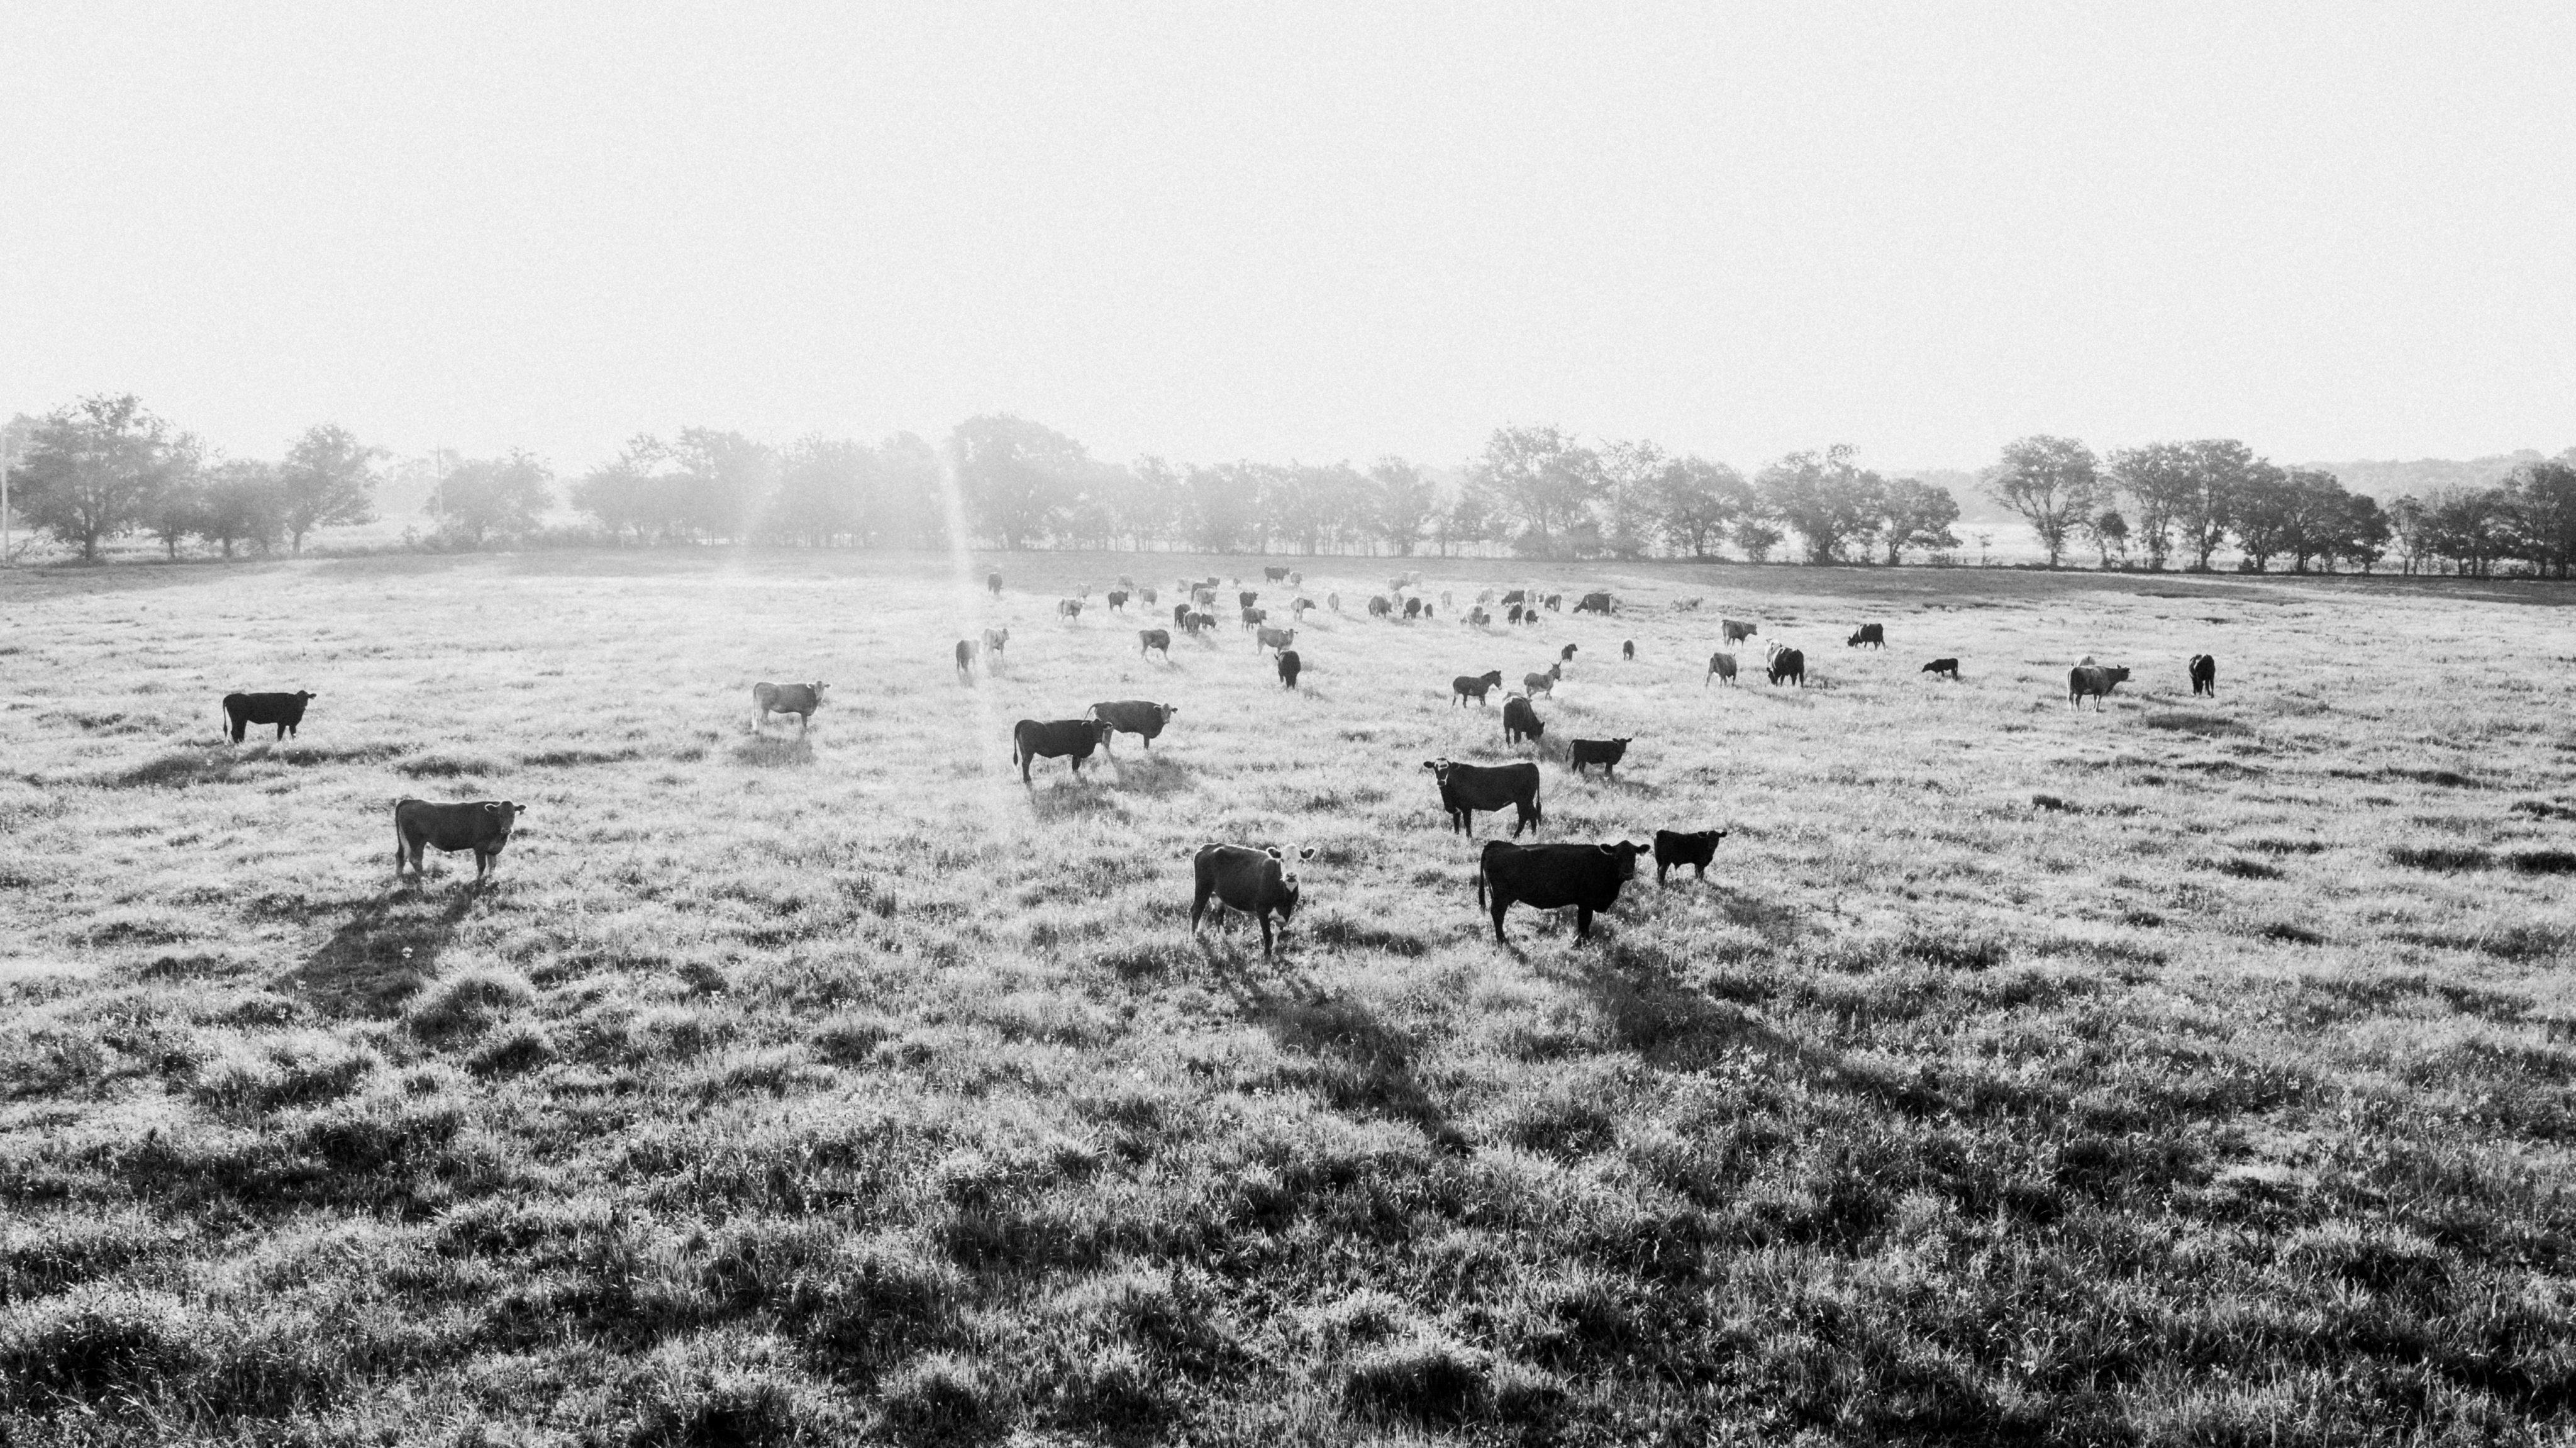 Nichiyobi field of cows